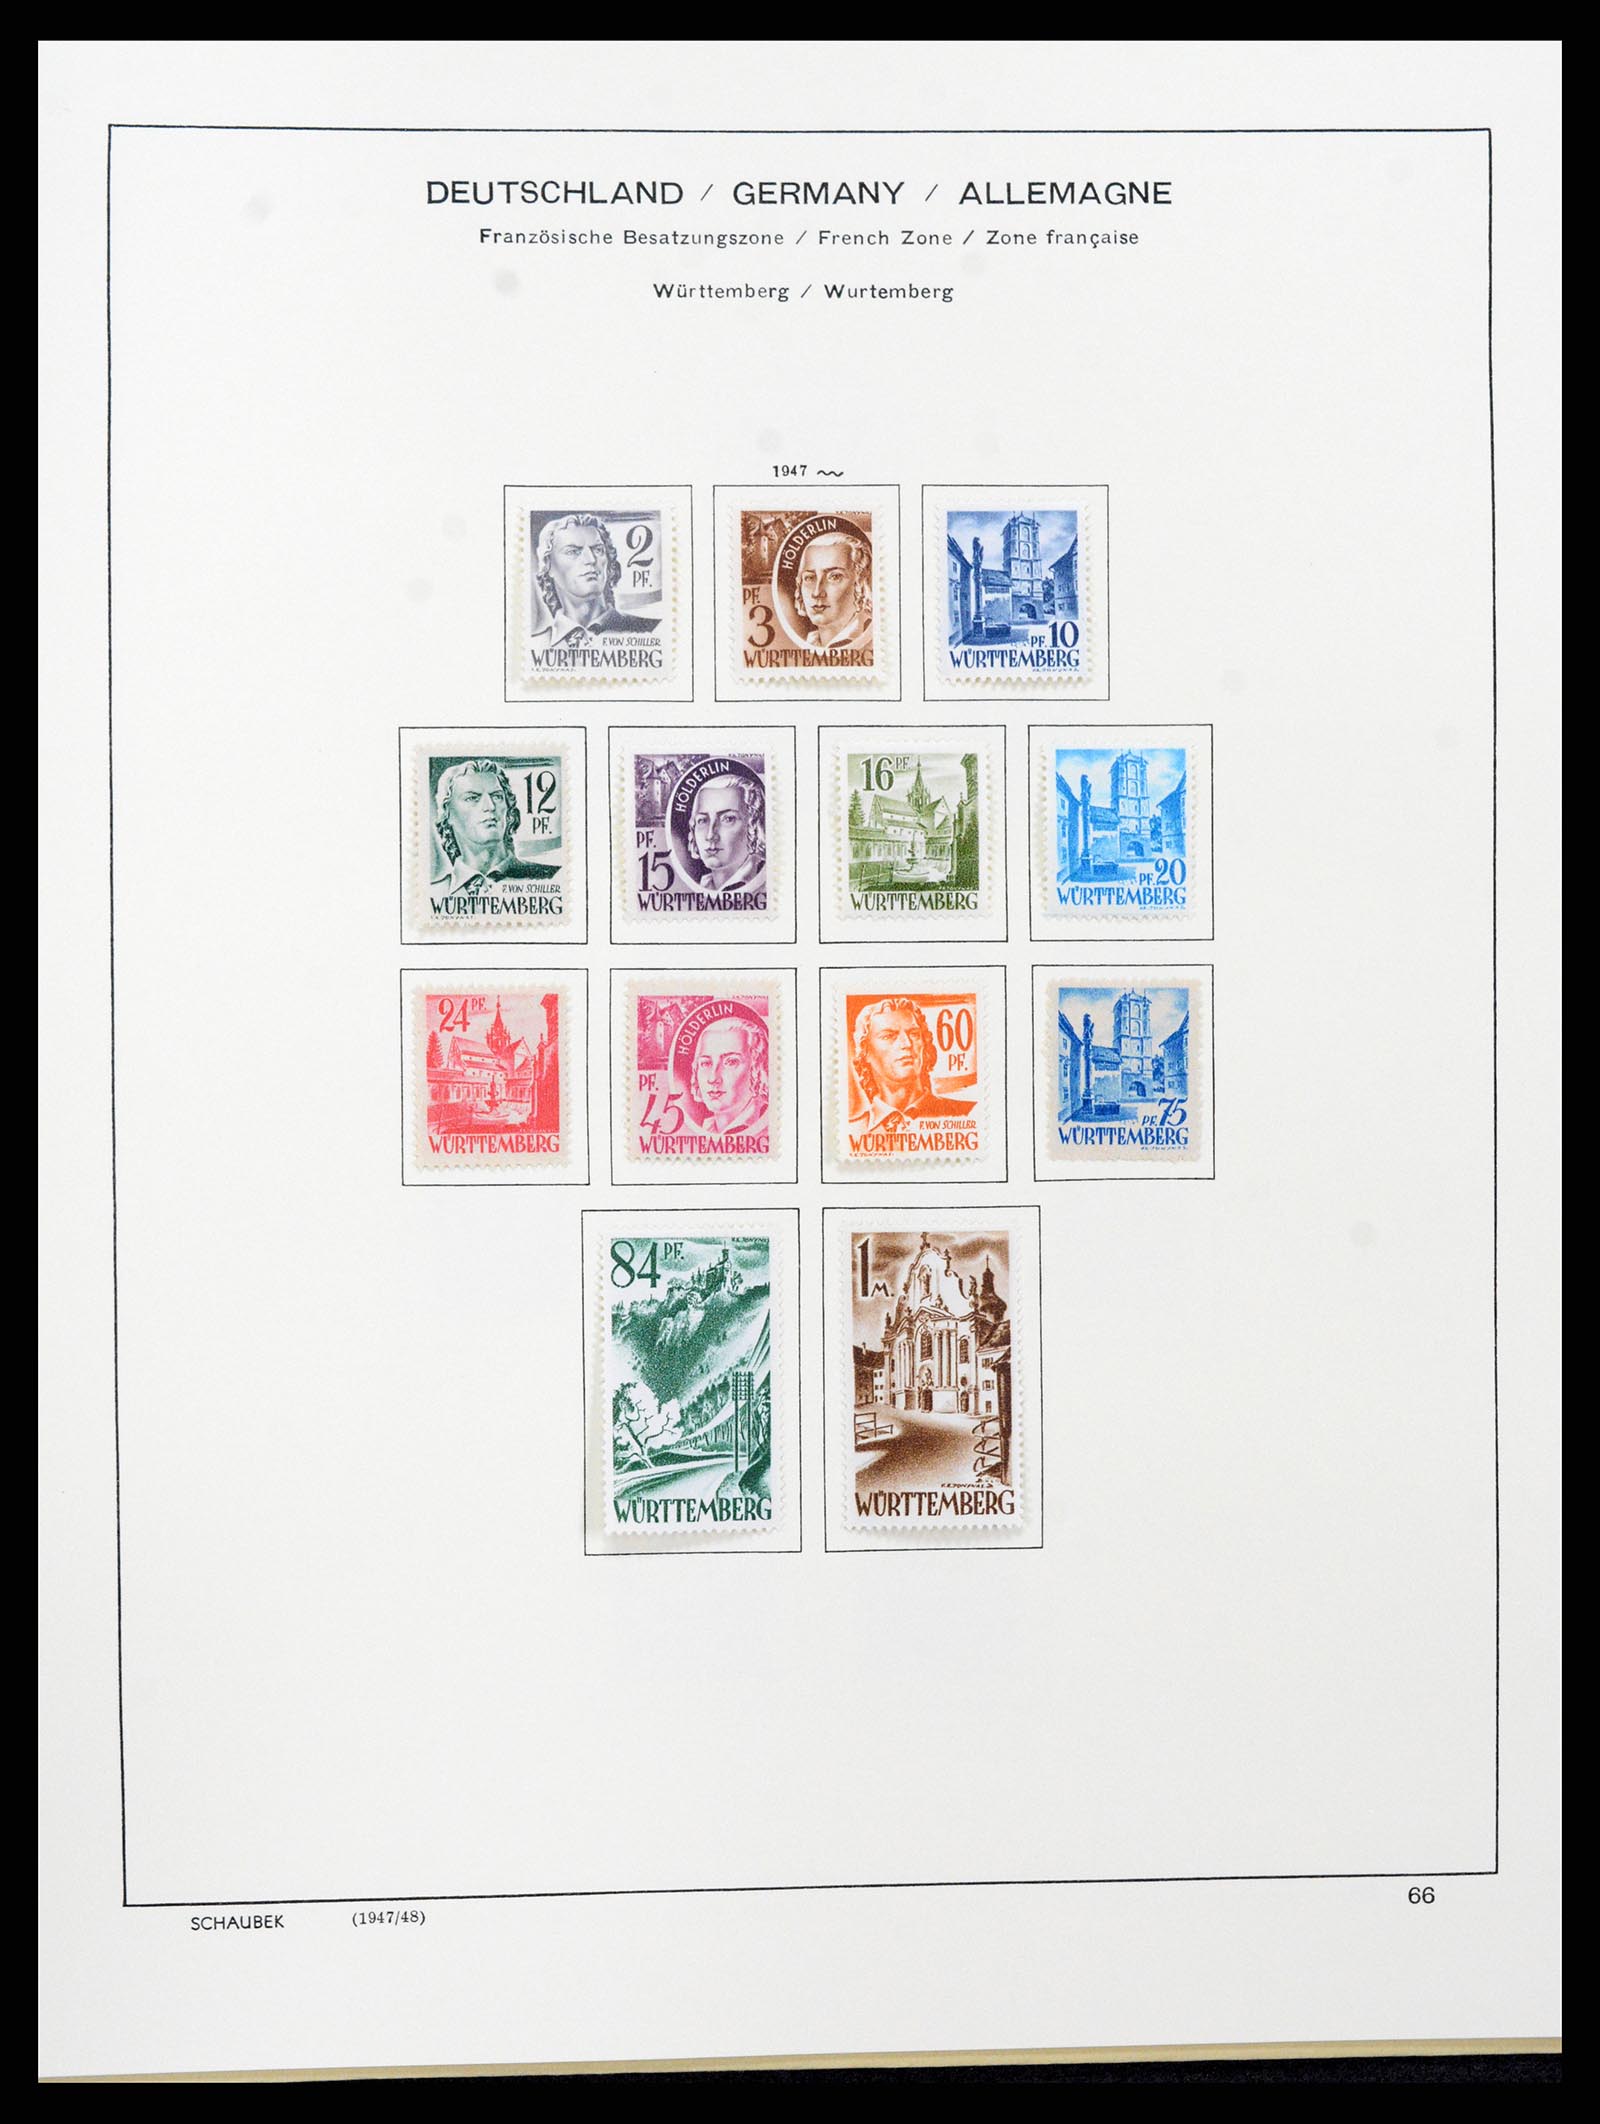 37645 068 - Stamp collection 37645 German Zones 1945-1949.